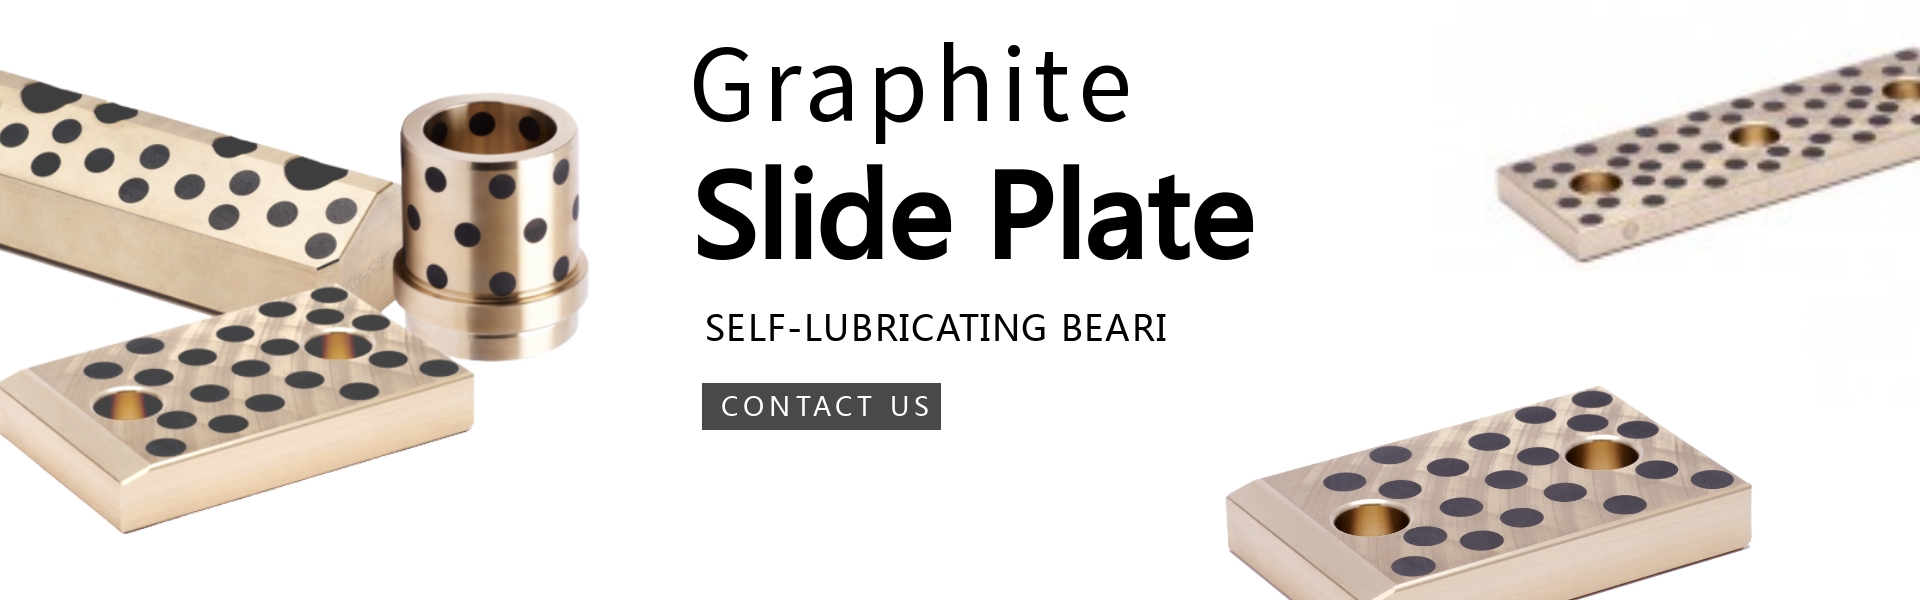 graphite Slide Plate